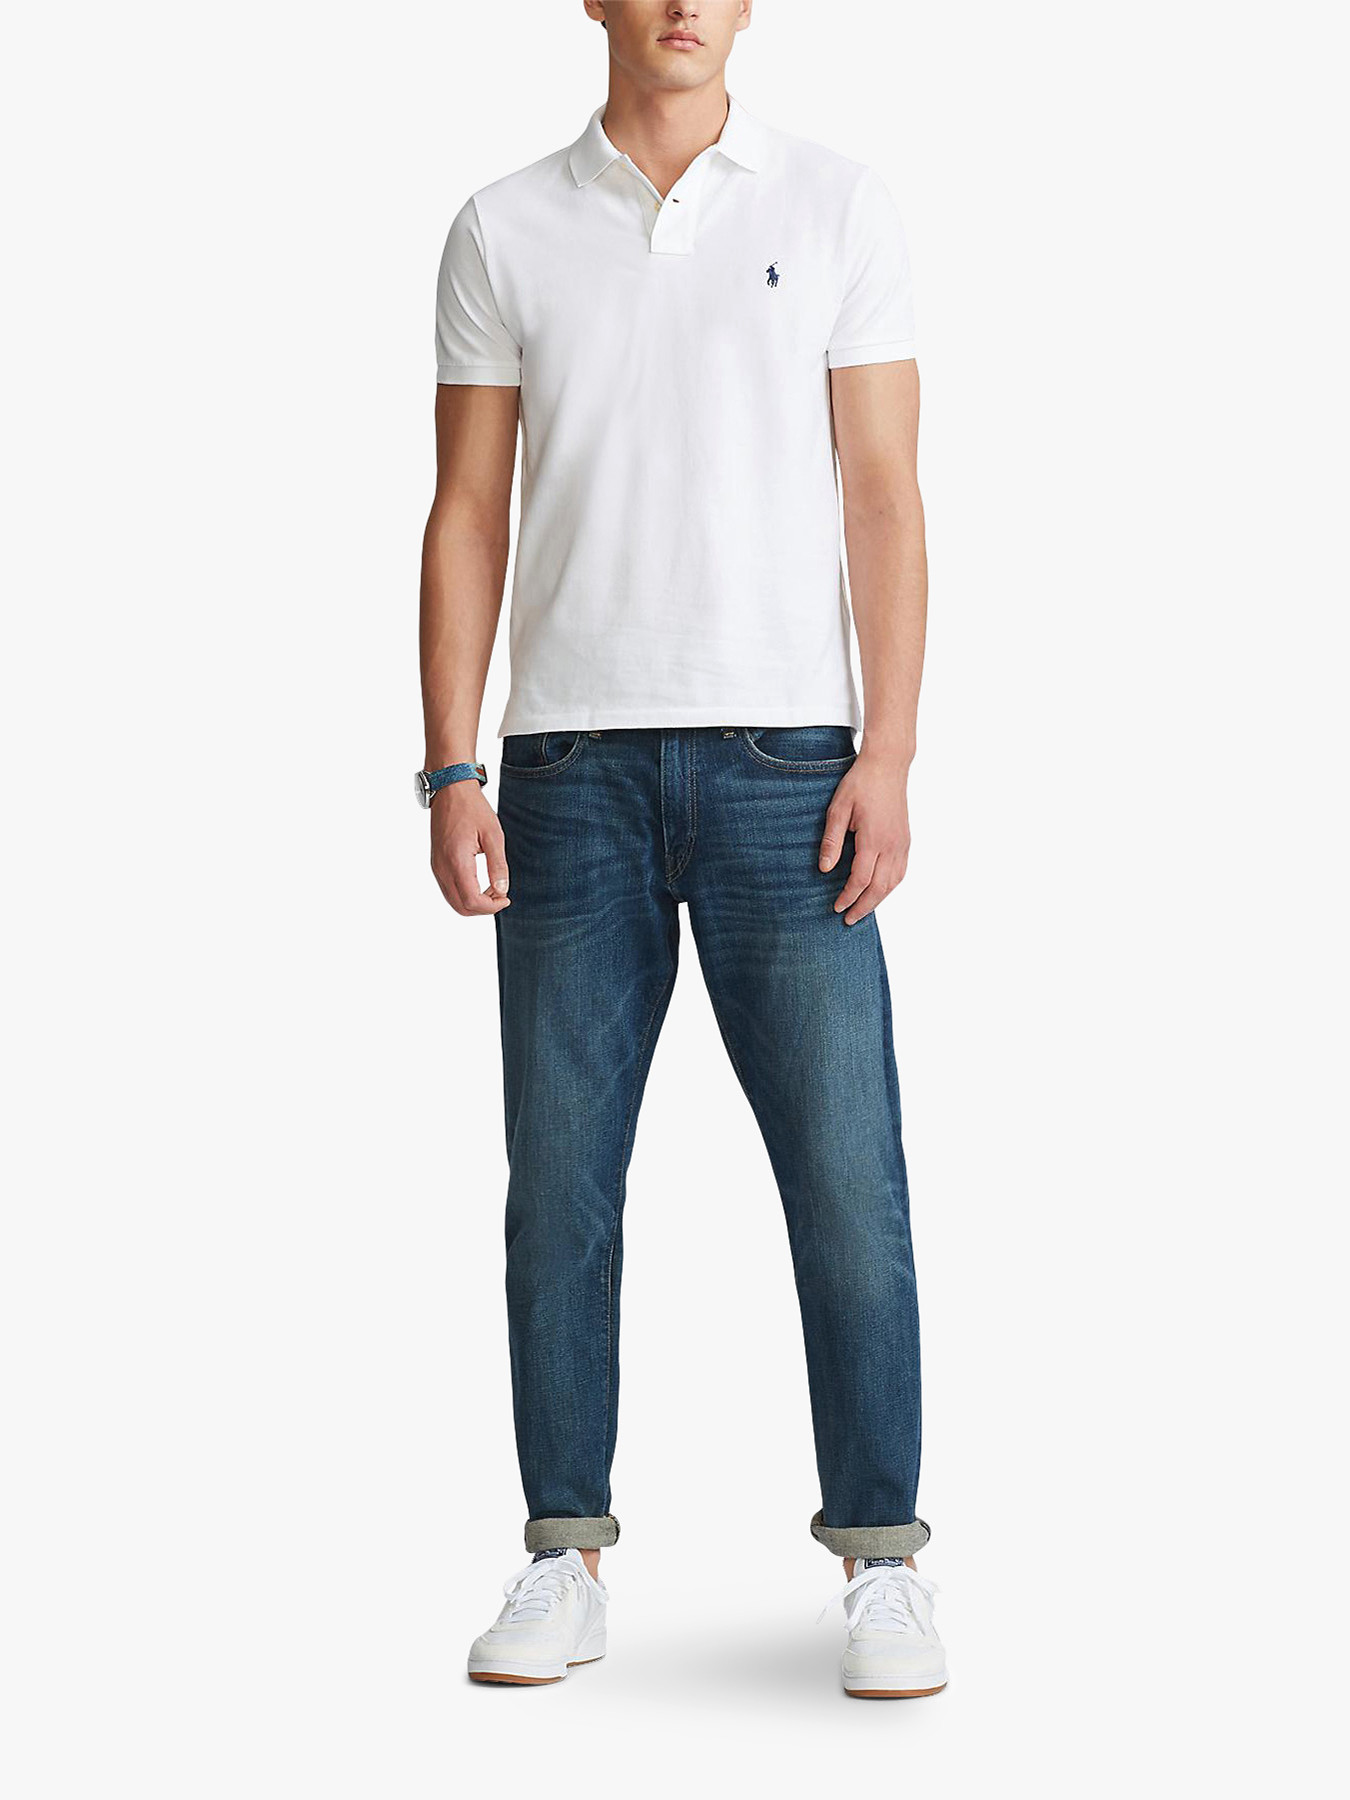 Men's Polo Ralph Lauren Custom Slim Fit Polo Shirt | Fenwick